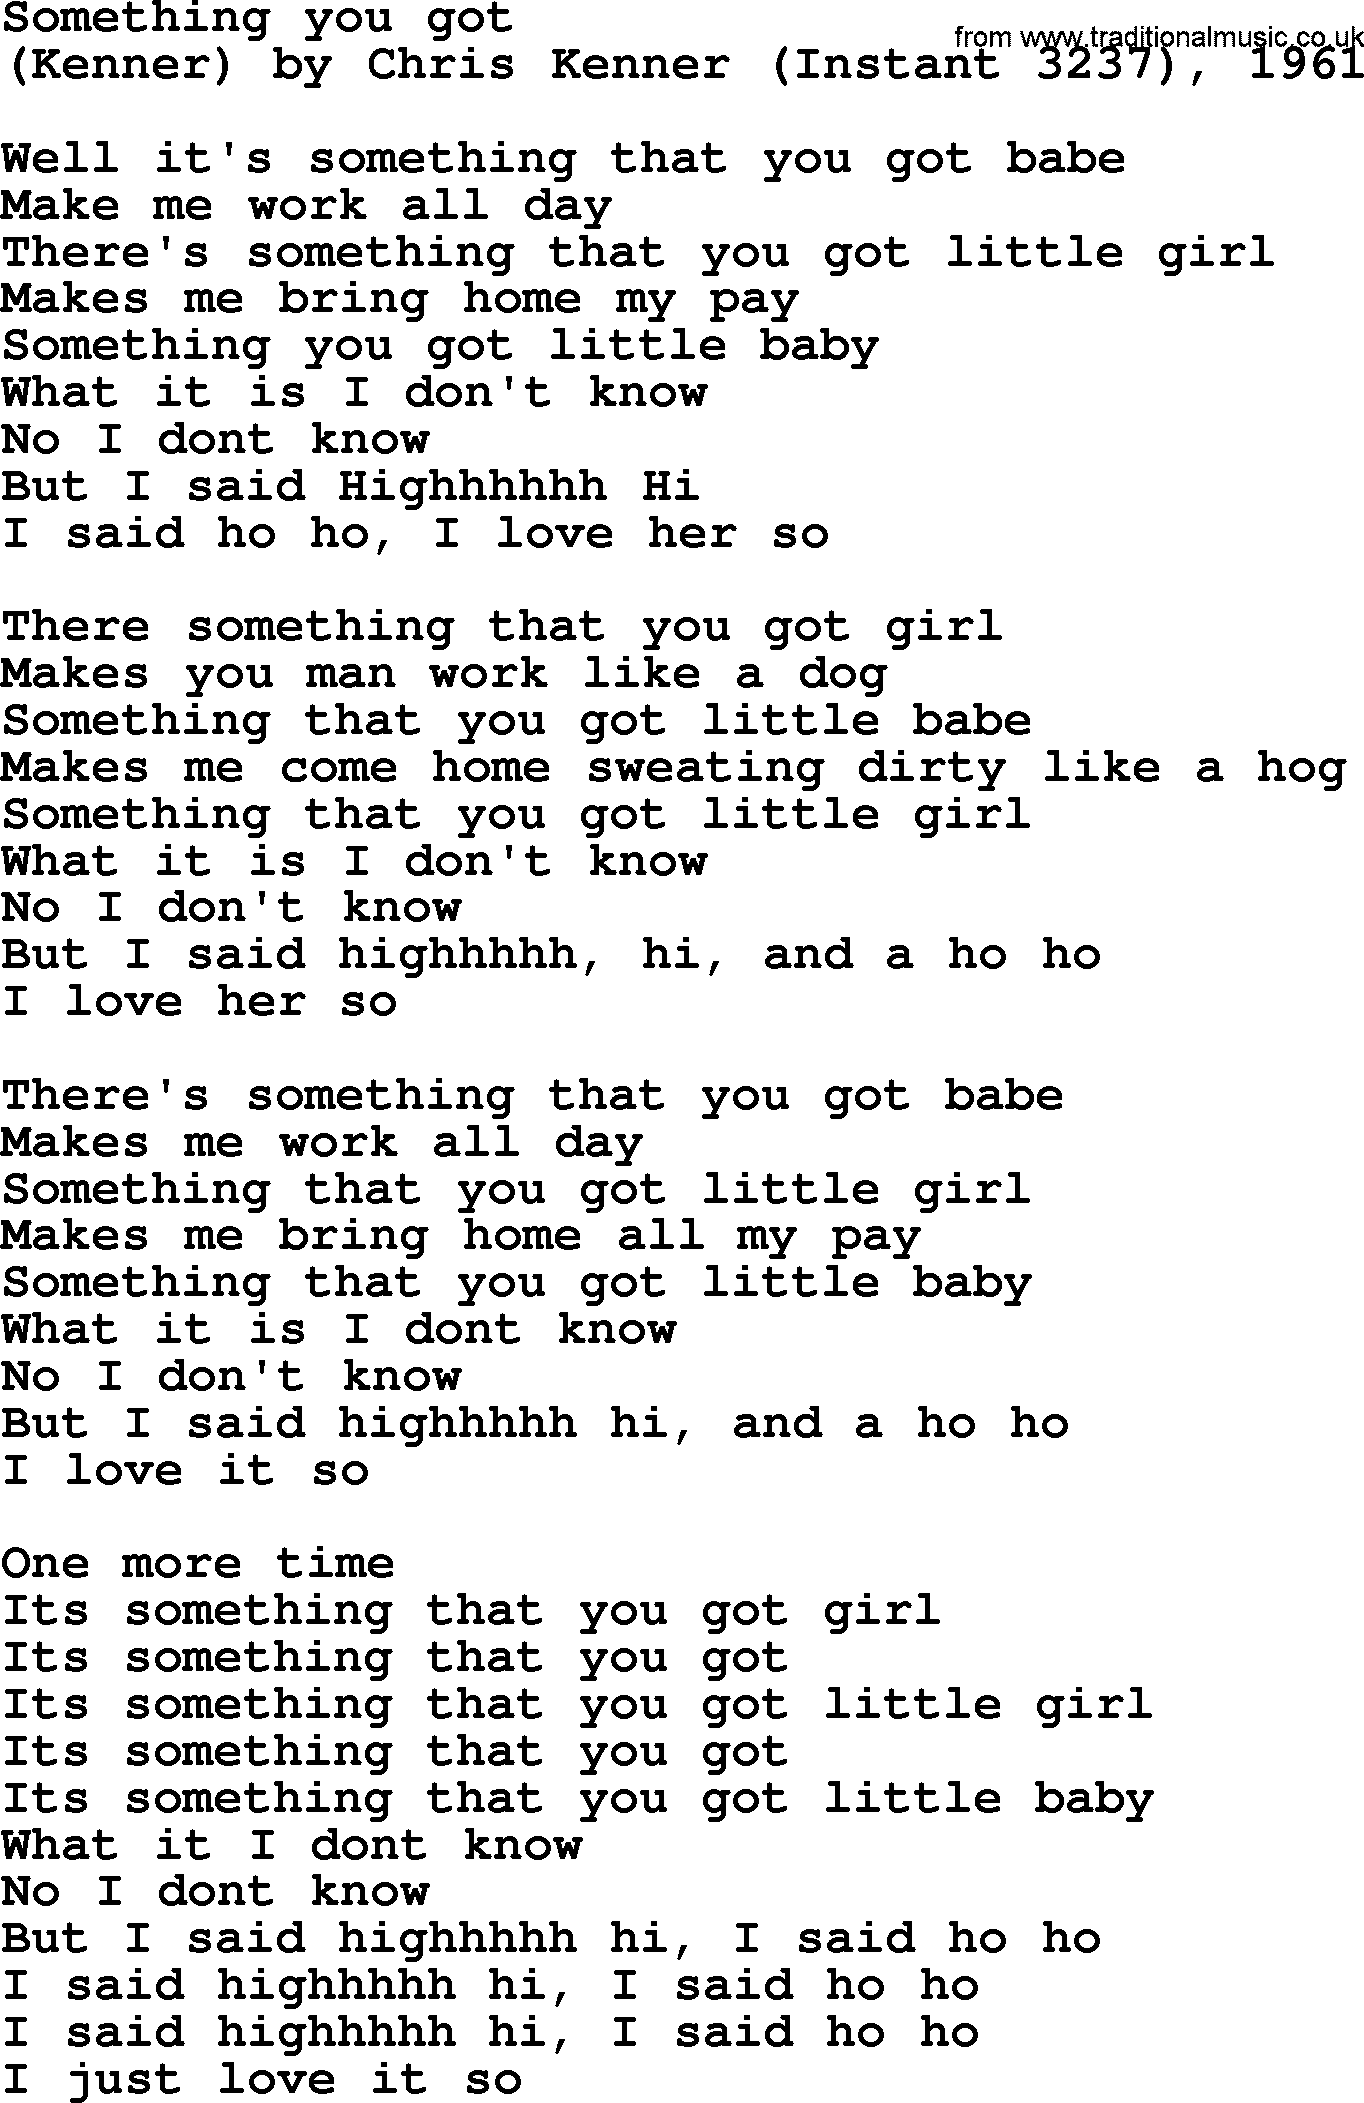 Bruce Springsteen song: Something You Got lyrics